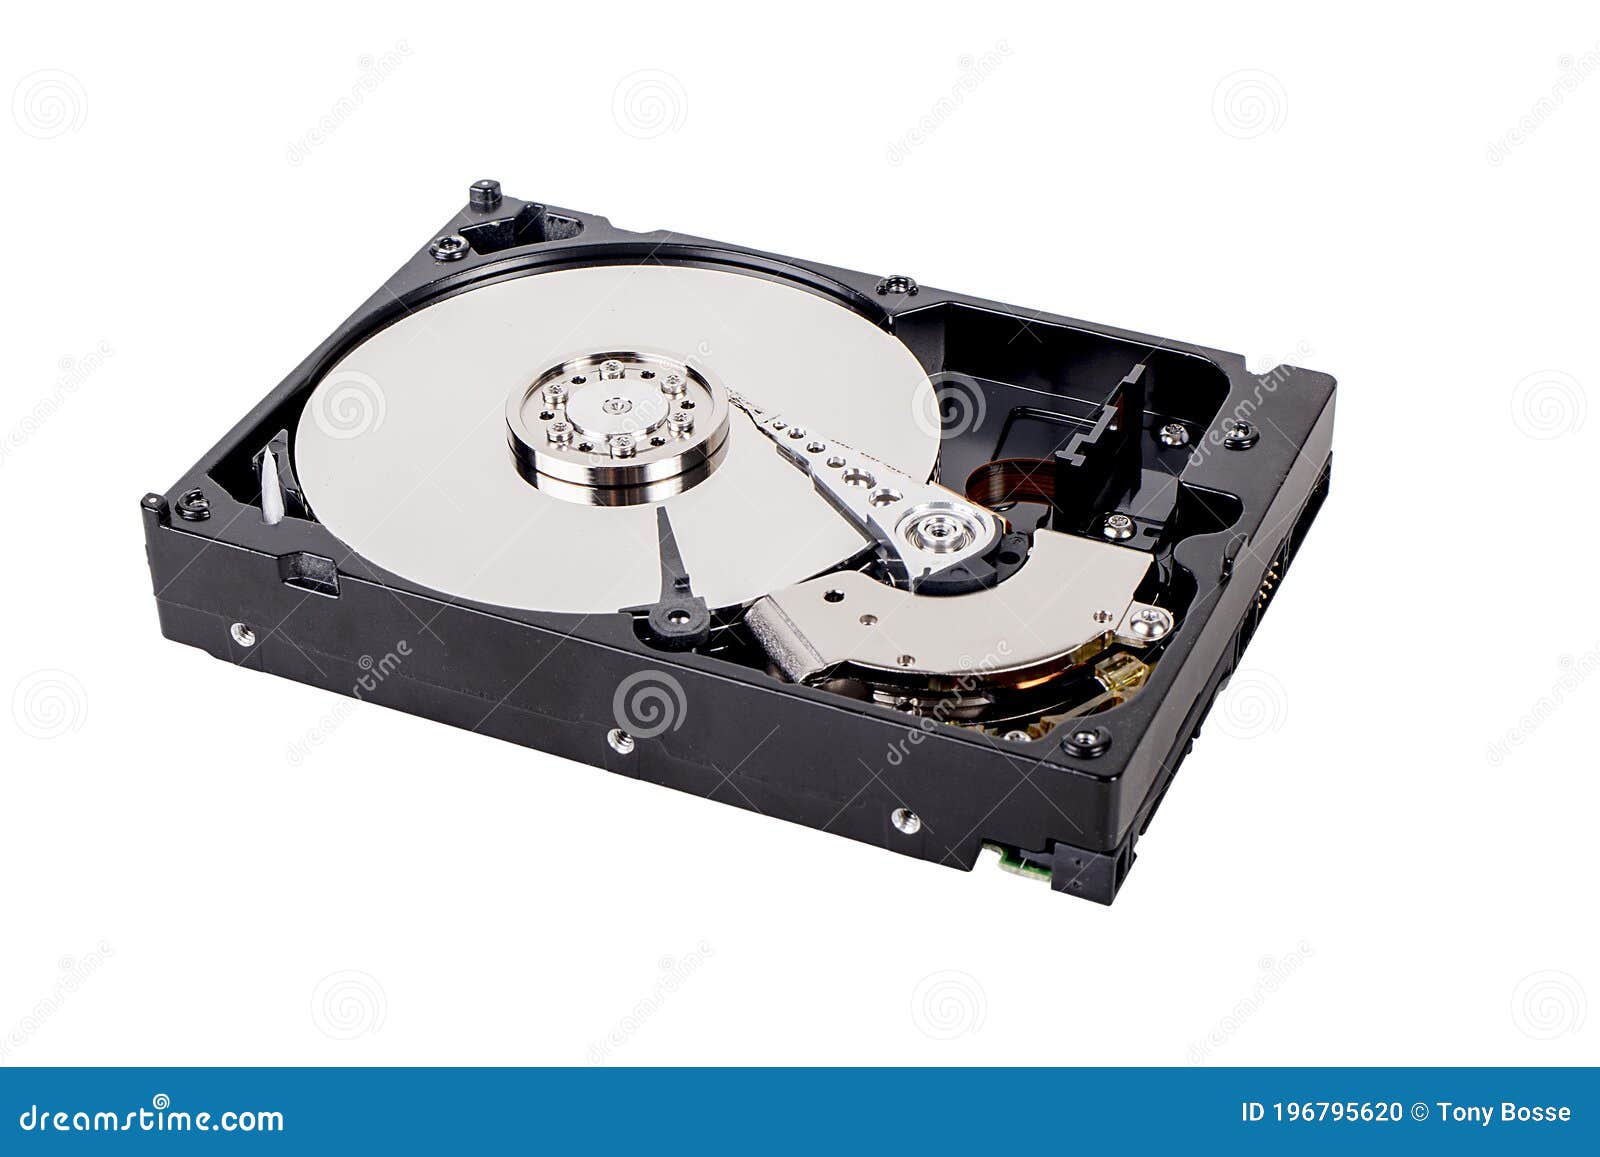 opened computer hard drive, 